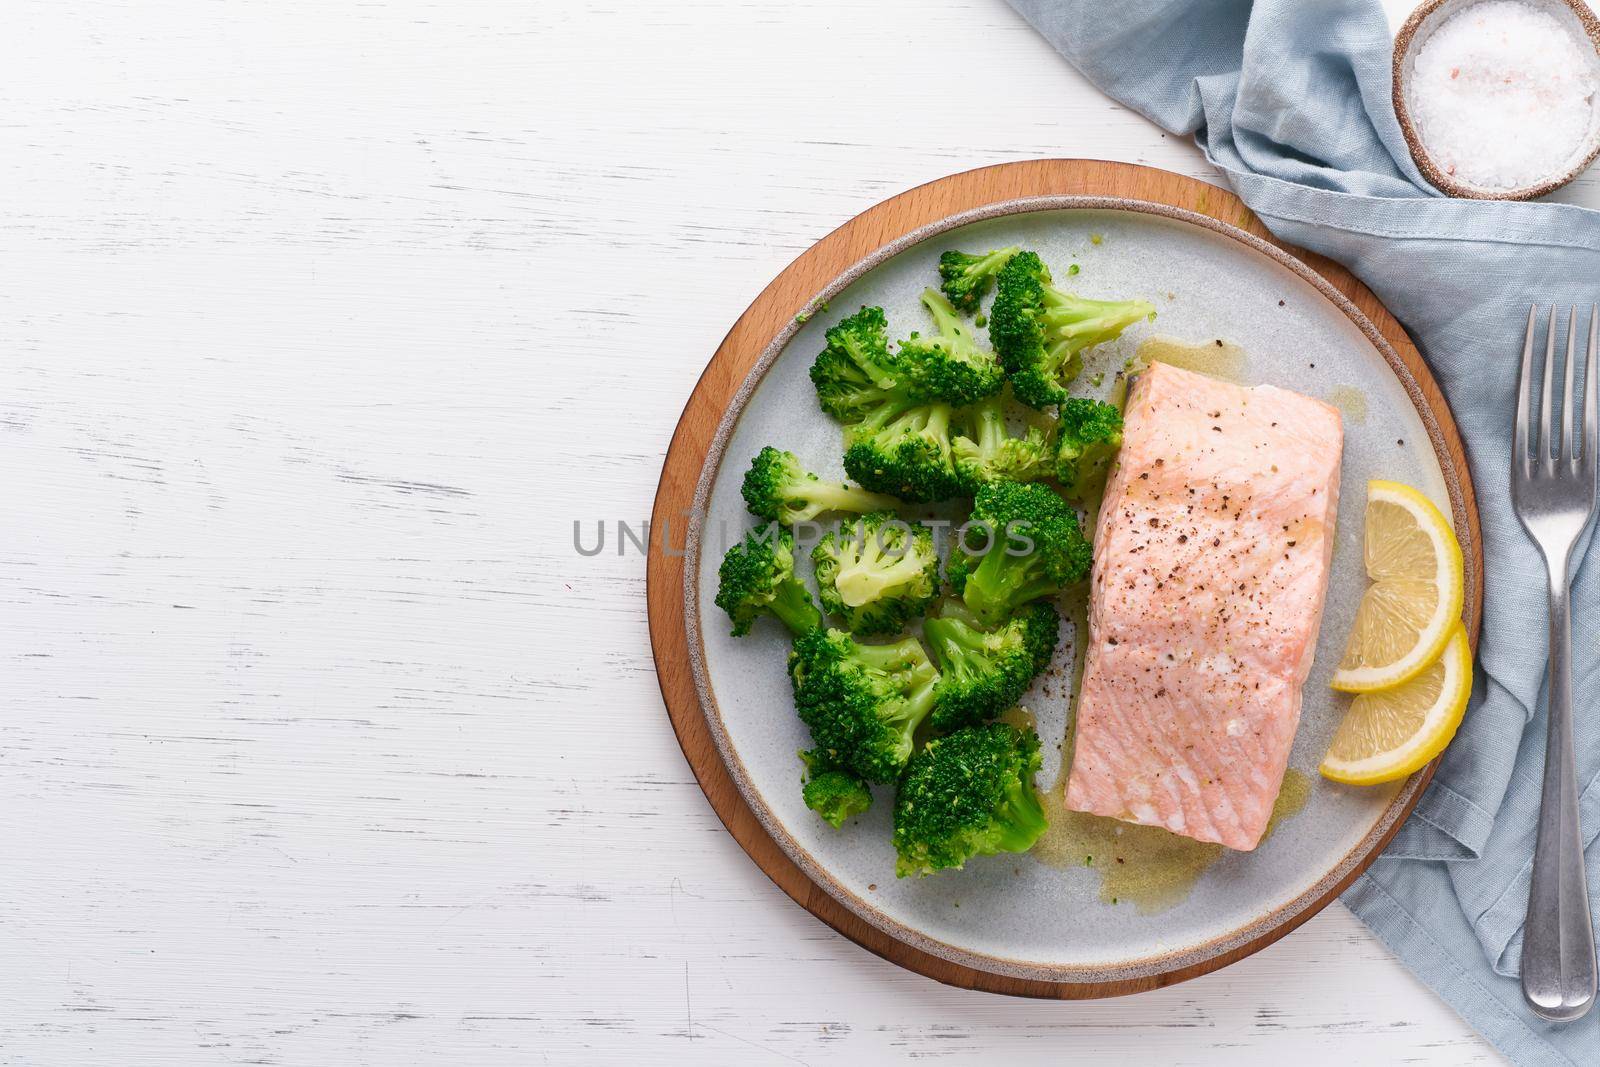 Steam salmon, broccoli, paleo, keto, lshf or dash diet. Mediterranean, Clean eating, balanced food. Gray ceramic plate on white table, copy space